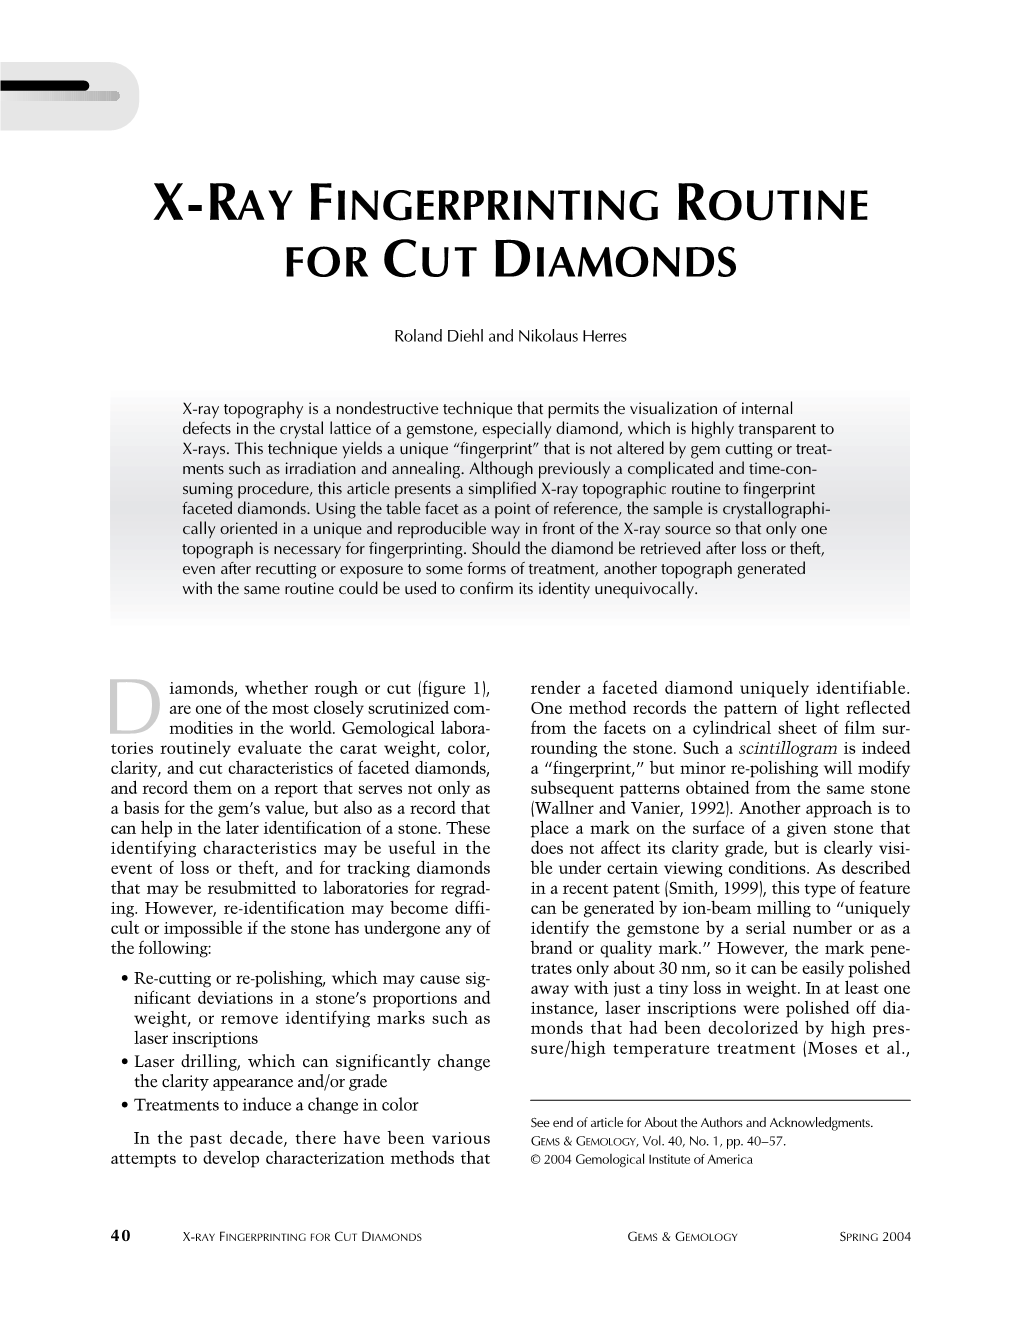 X-Ray Fingerprinting Routine for Cut Diamonds